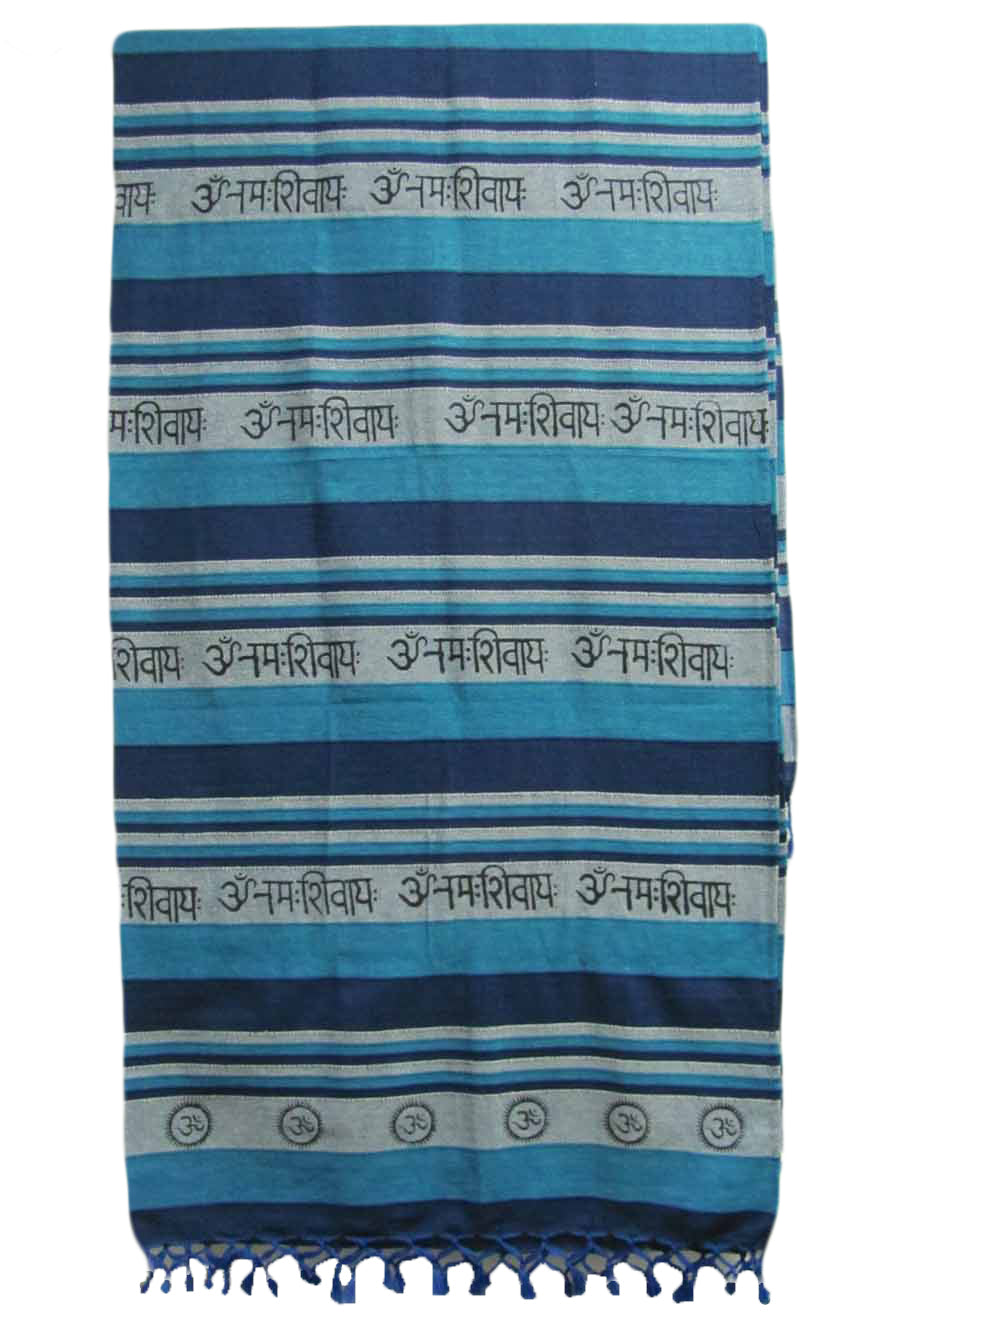 Indian Om Namah Shivay Yoga Meditation Handloomed Cotton Blue Throw Bedspread Tapestry - Ambali Fashion Tapestries beach, bohemian, boho, classic, eastern, ethnic, hippie, indian, lightweight